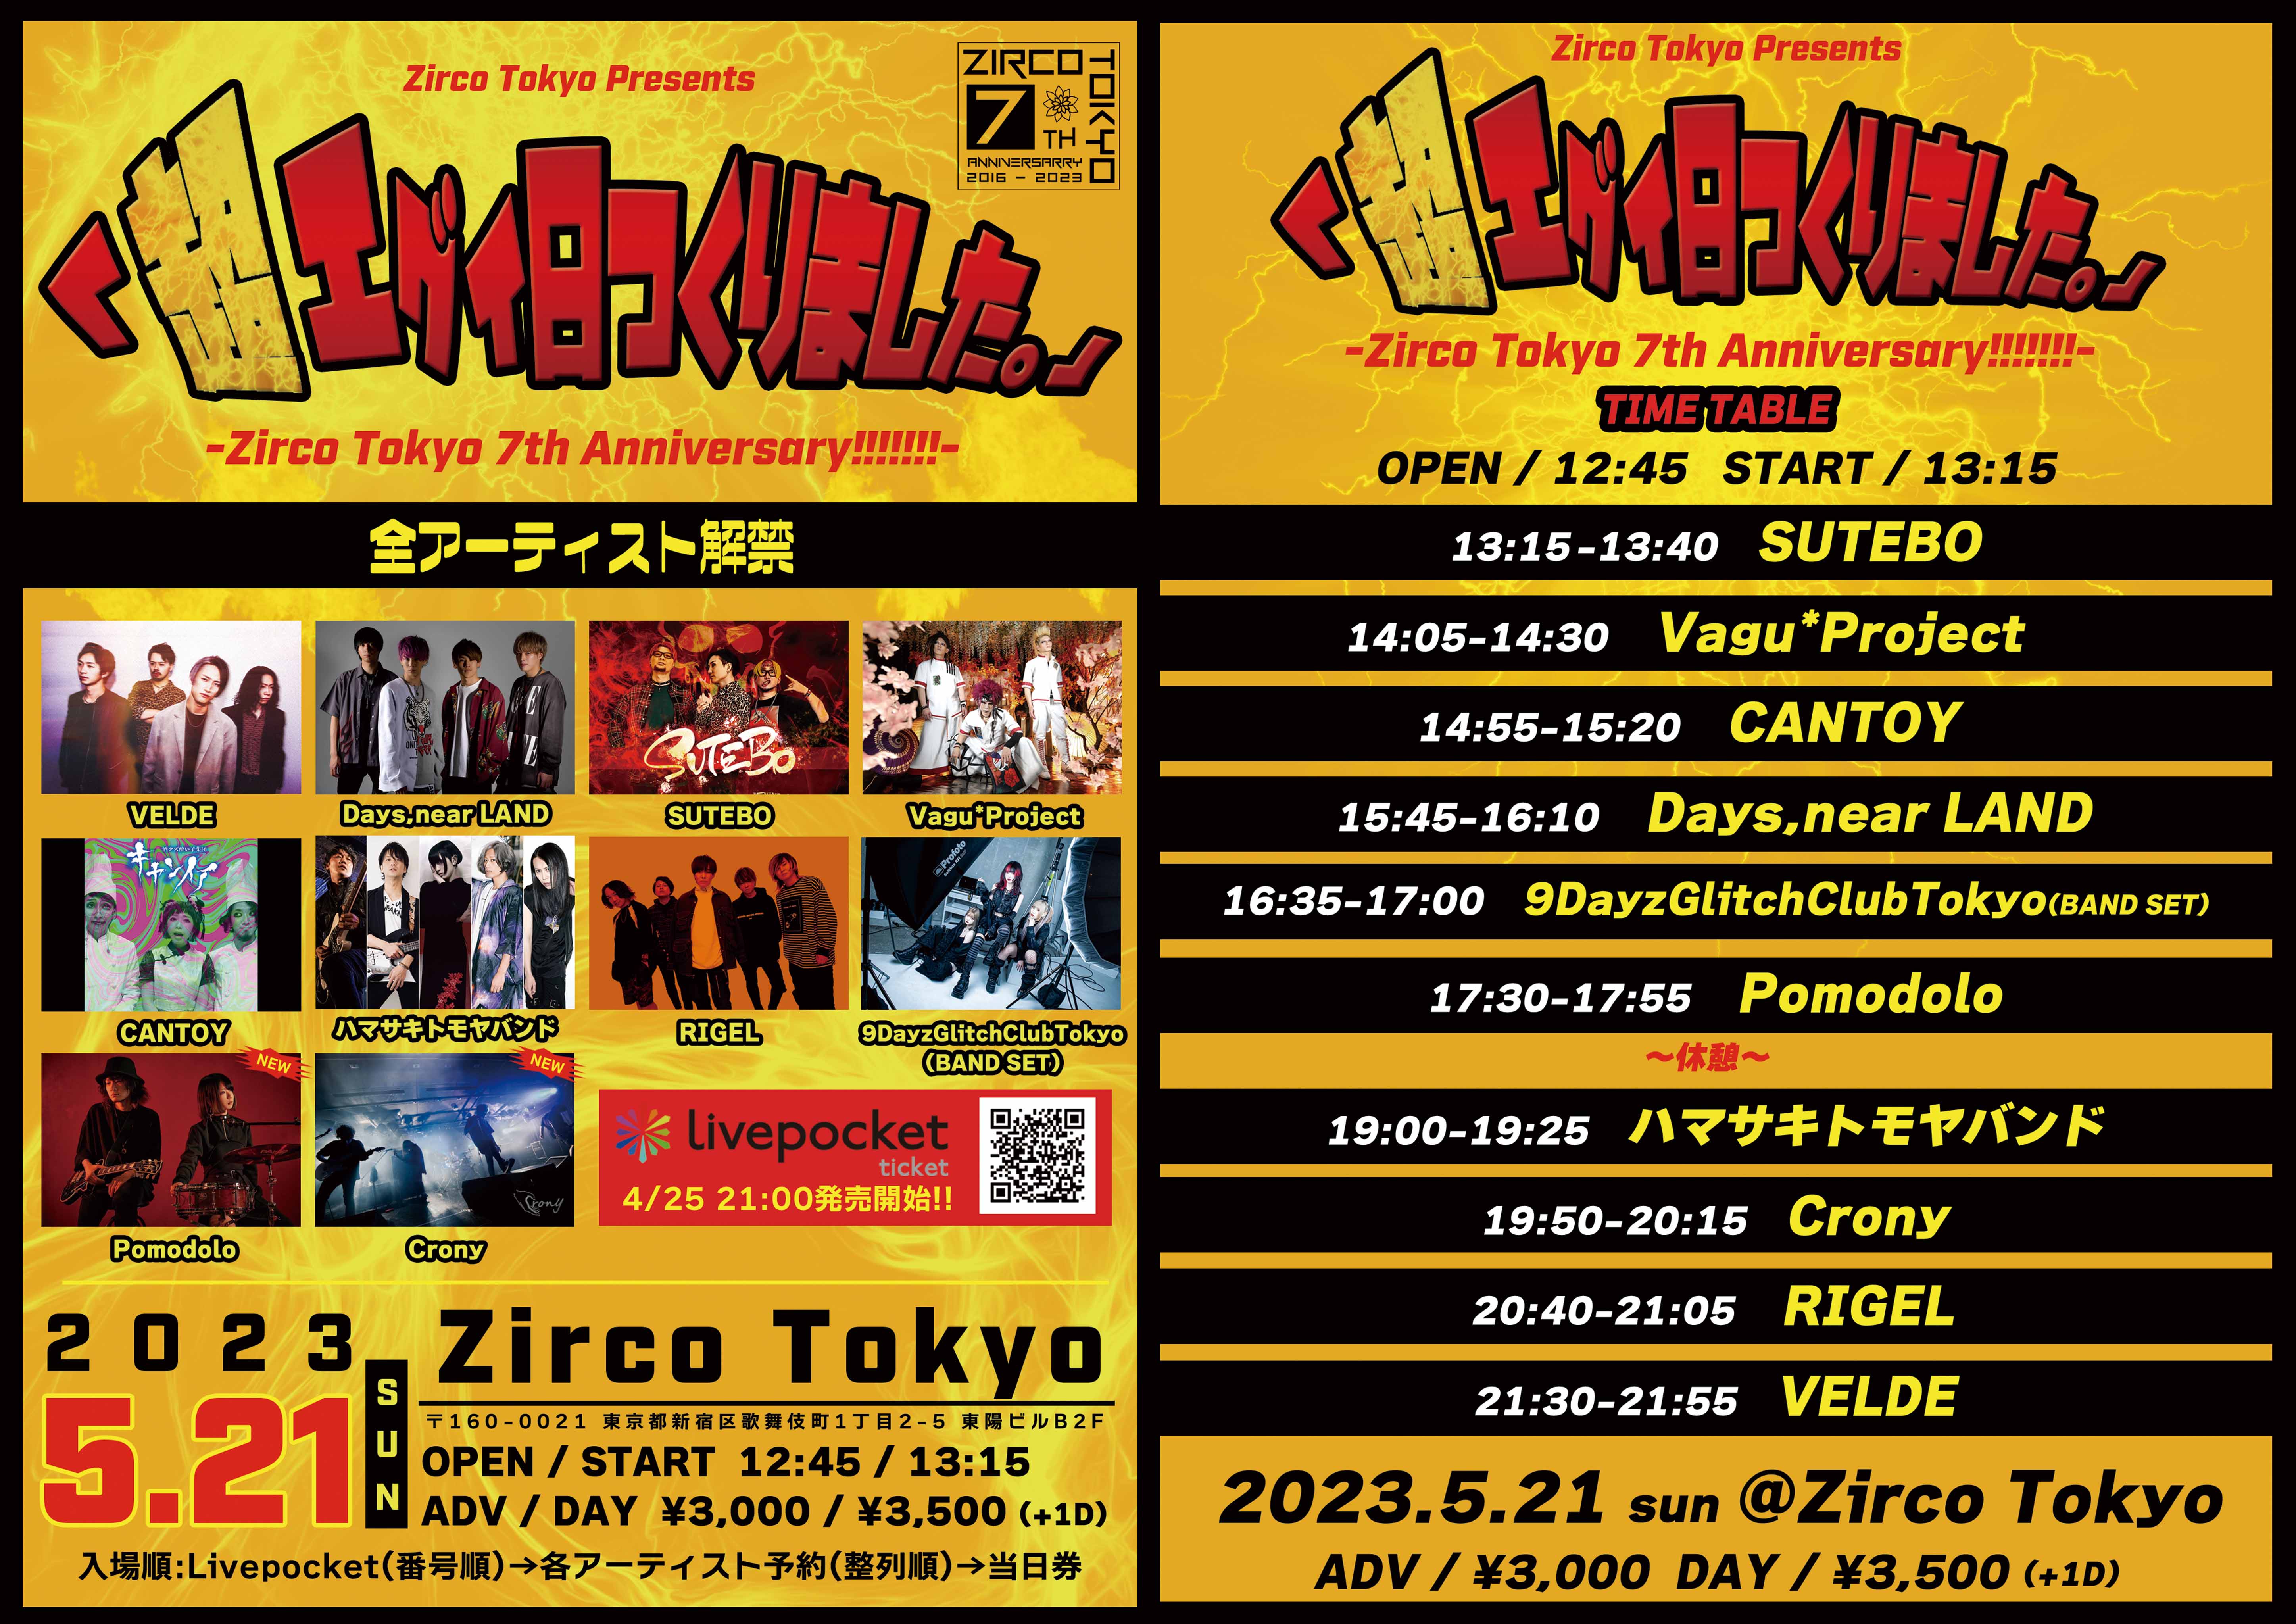 Zirco Tokyo Presents 「超エグイ日つくりました。」-Zirco Tokyo 7th Anniversary!!!!!!!-